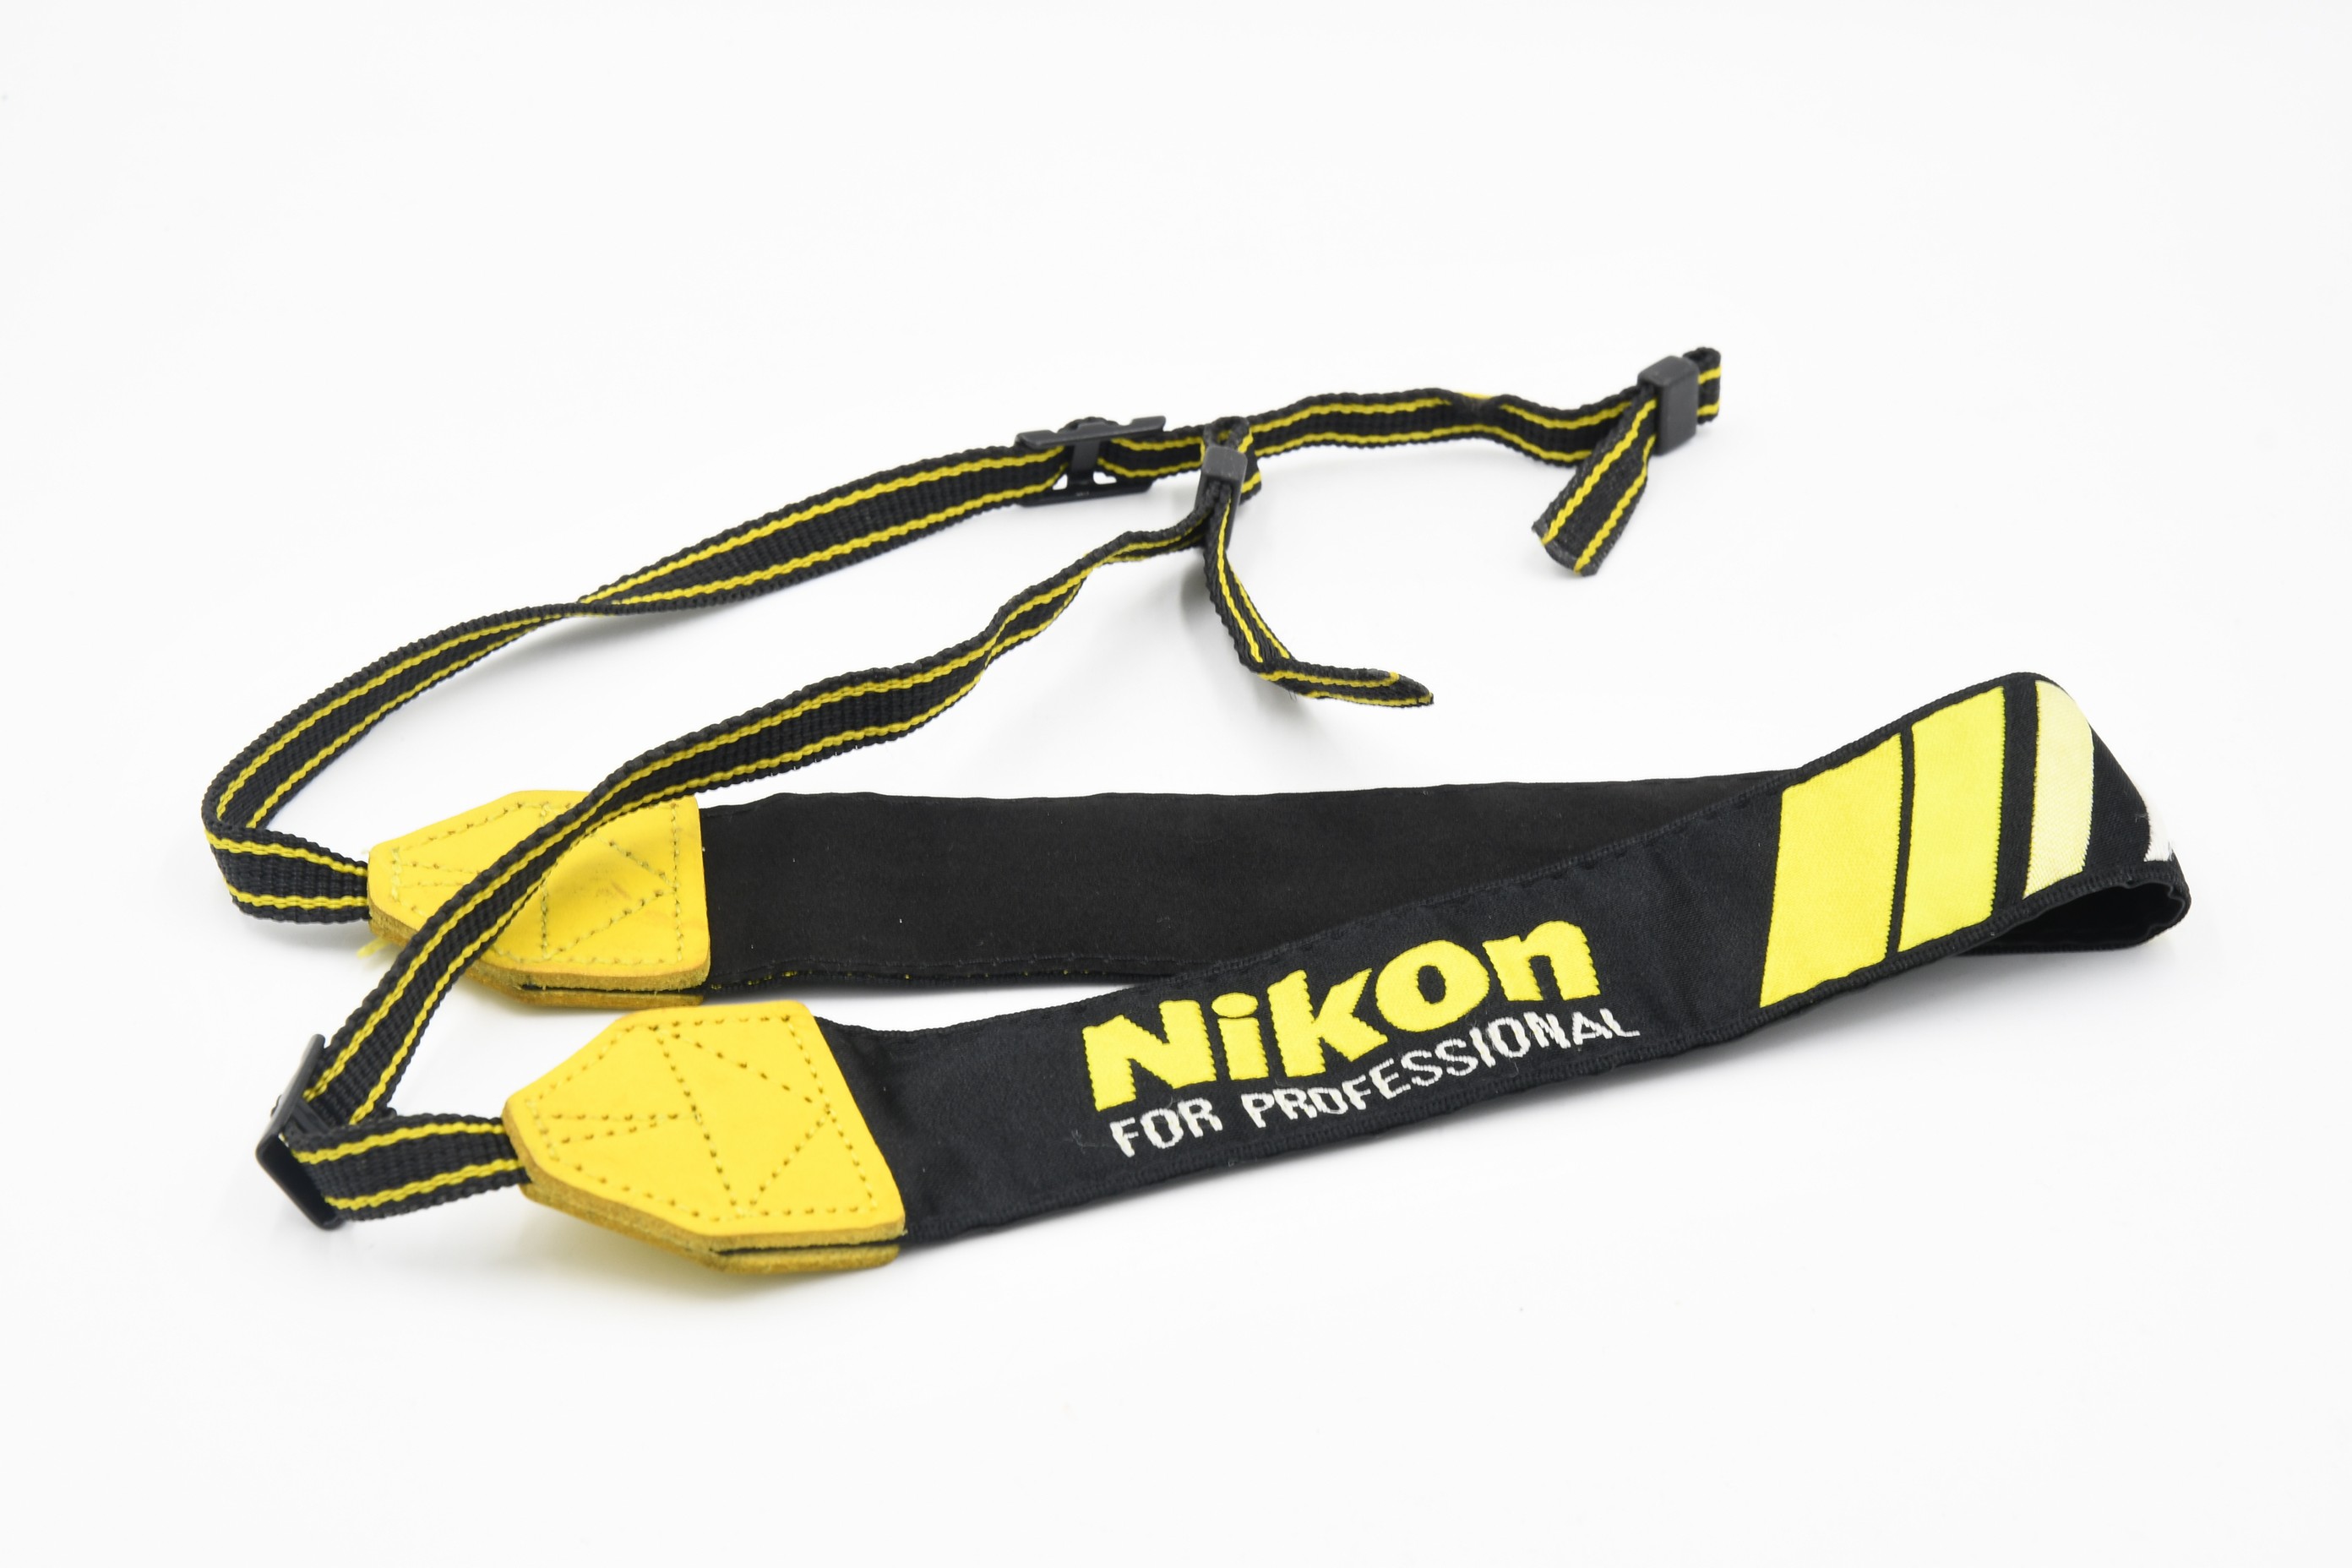    Nikon for professional (..  4)